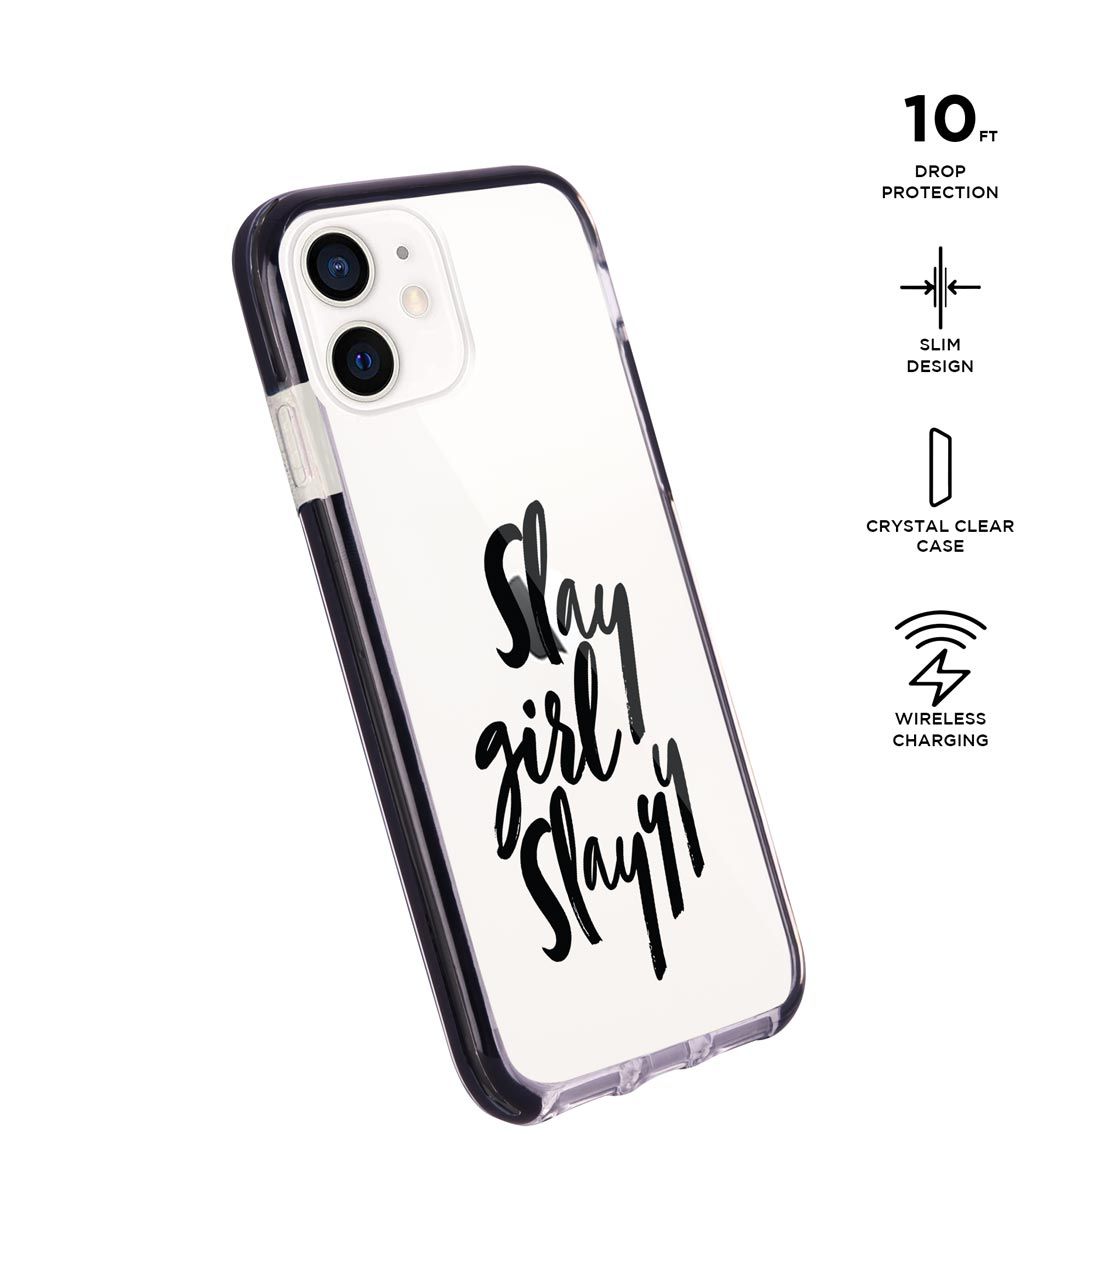 Slay girl Slay - Extreme Case for iPhone 12 Mini